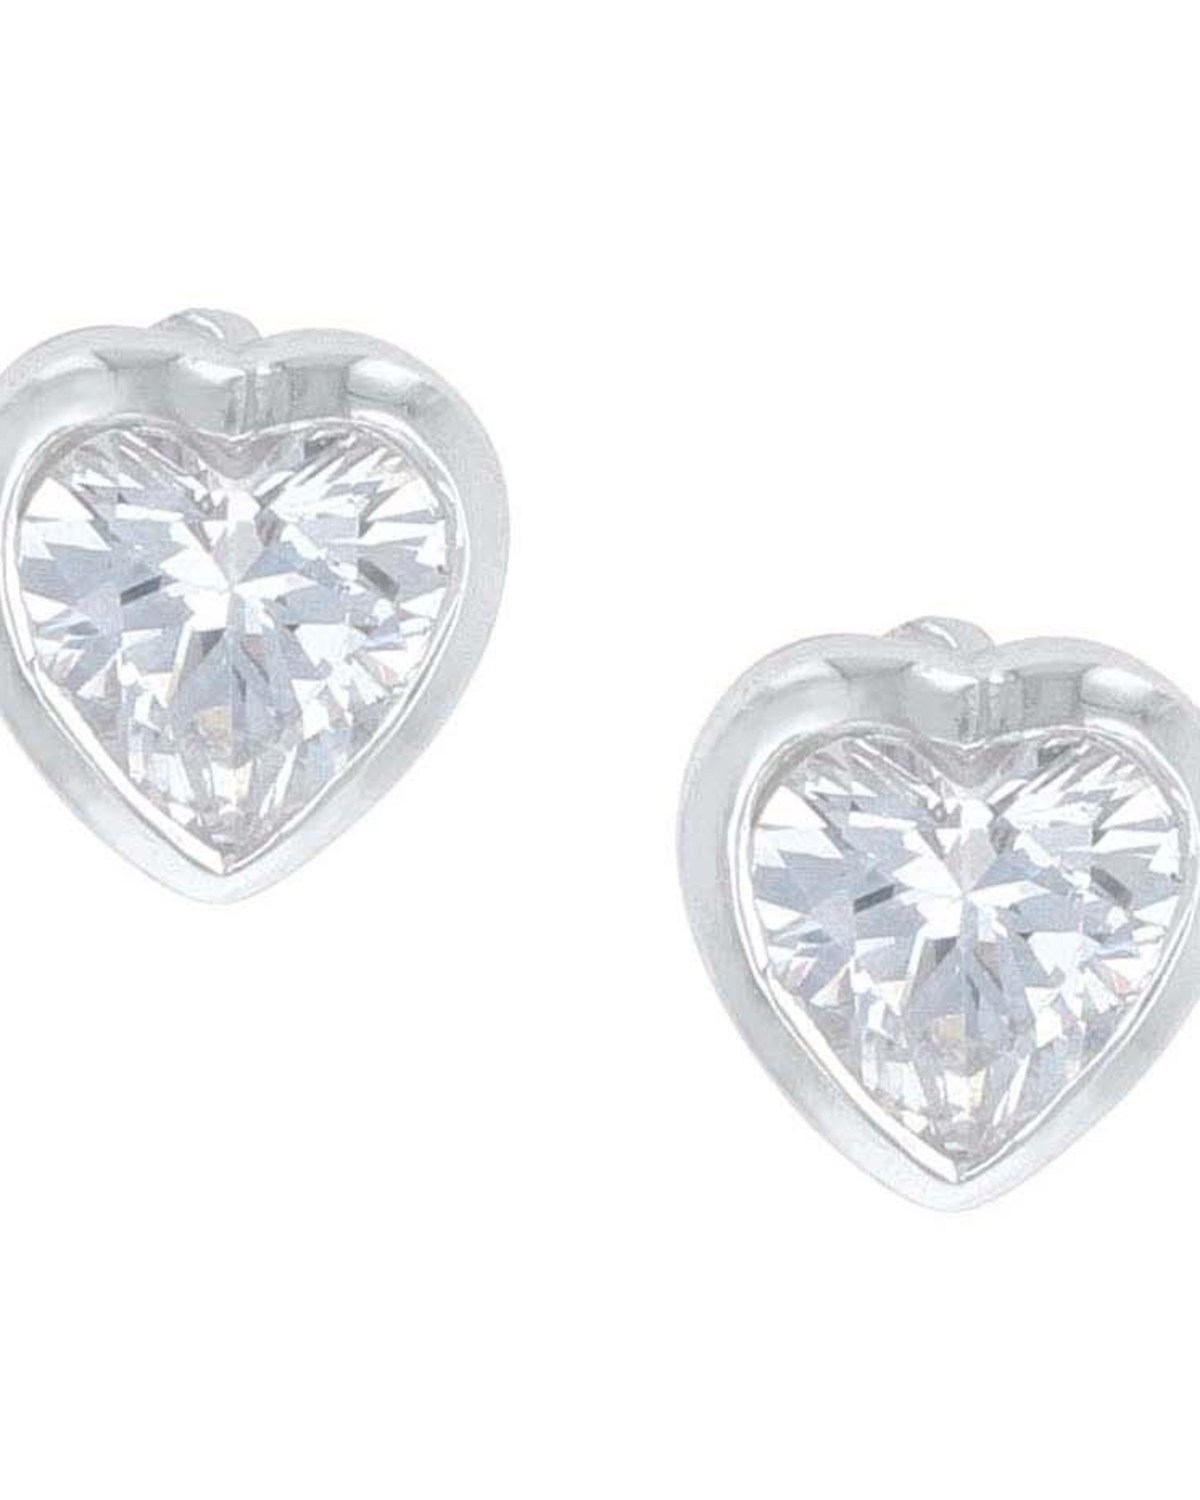 Montana Silversmiths Women's Tiny Heart Crystal Post Earrings